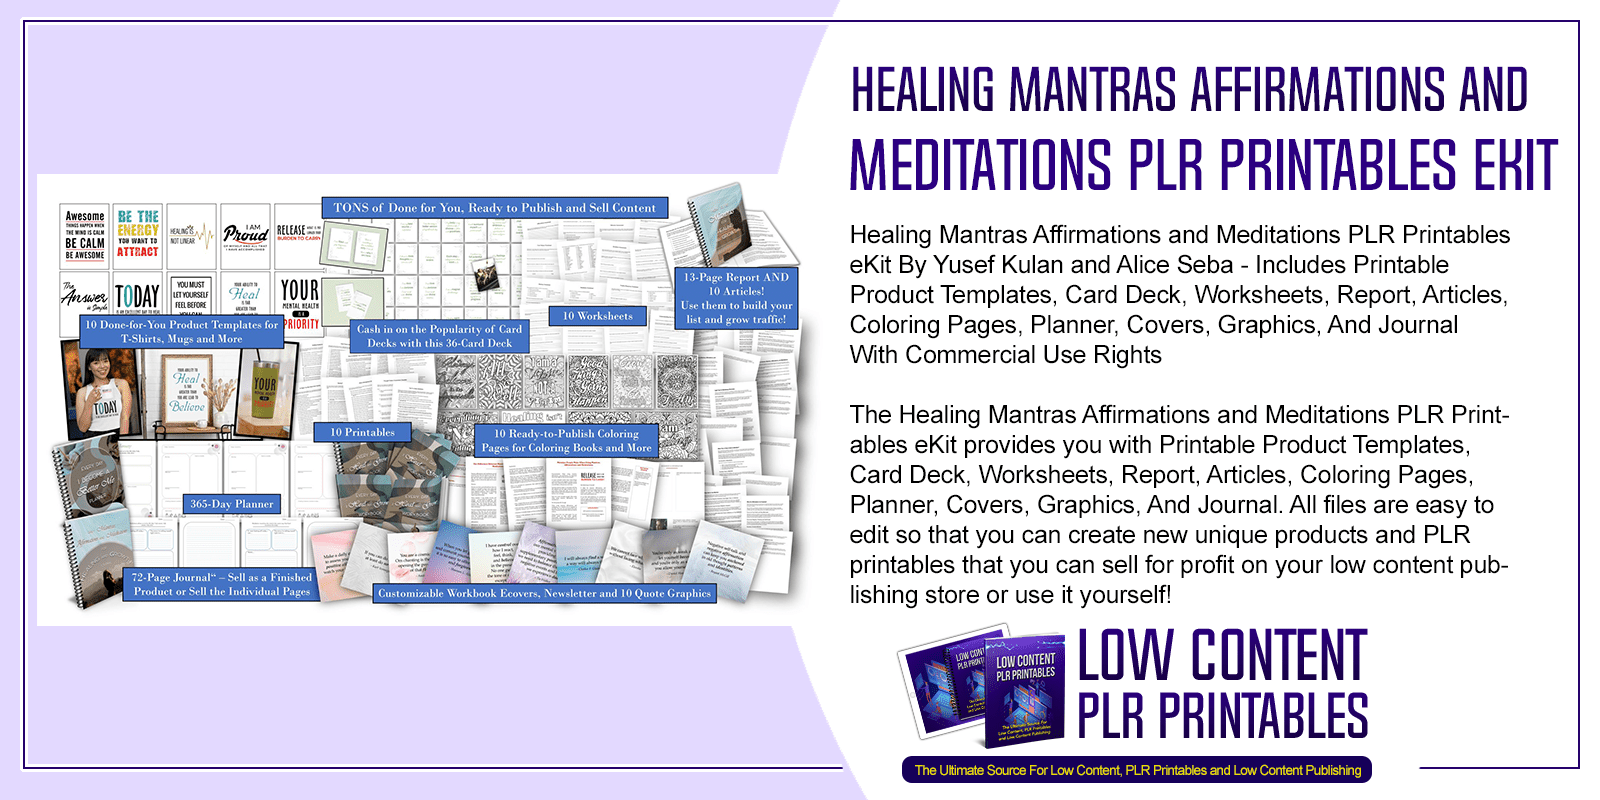 Healing Mantras Affirmations and Meditations PLR Printables eKit